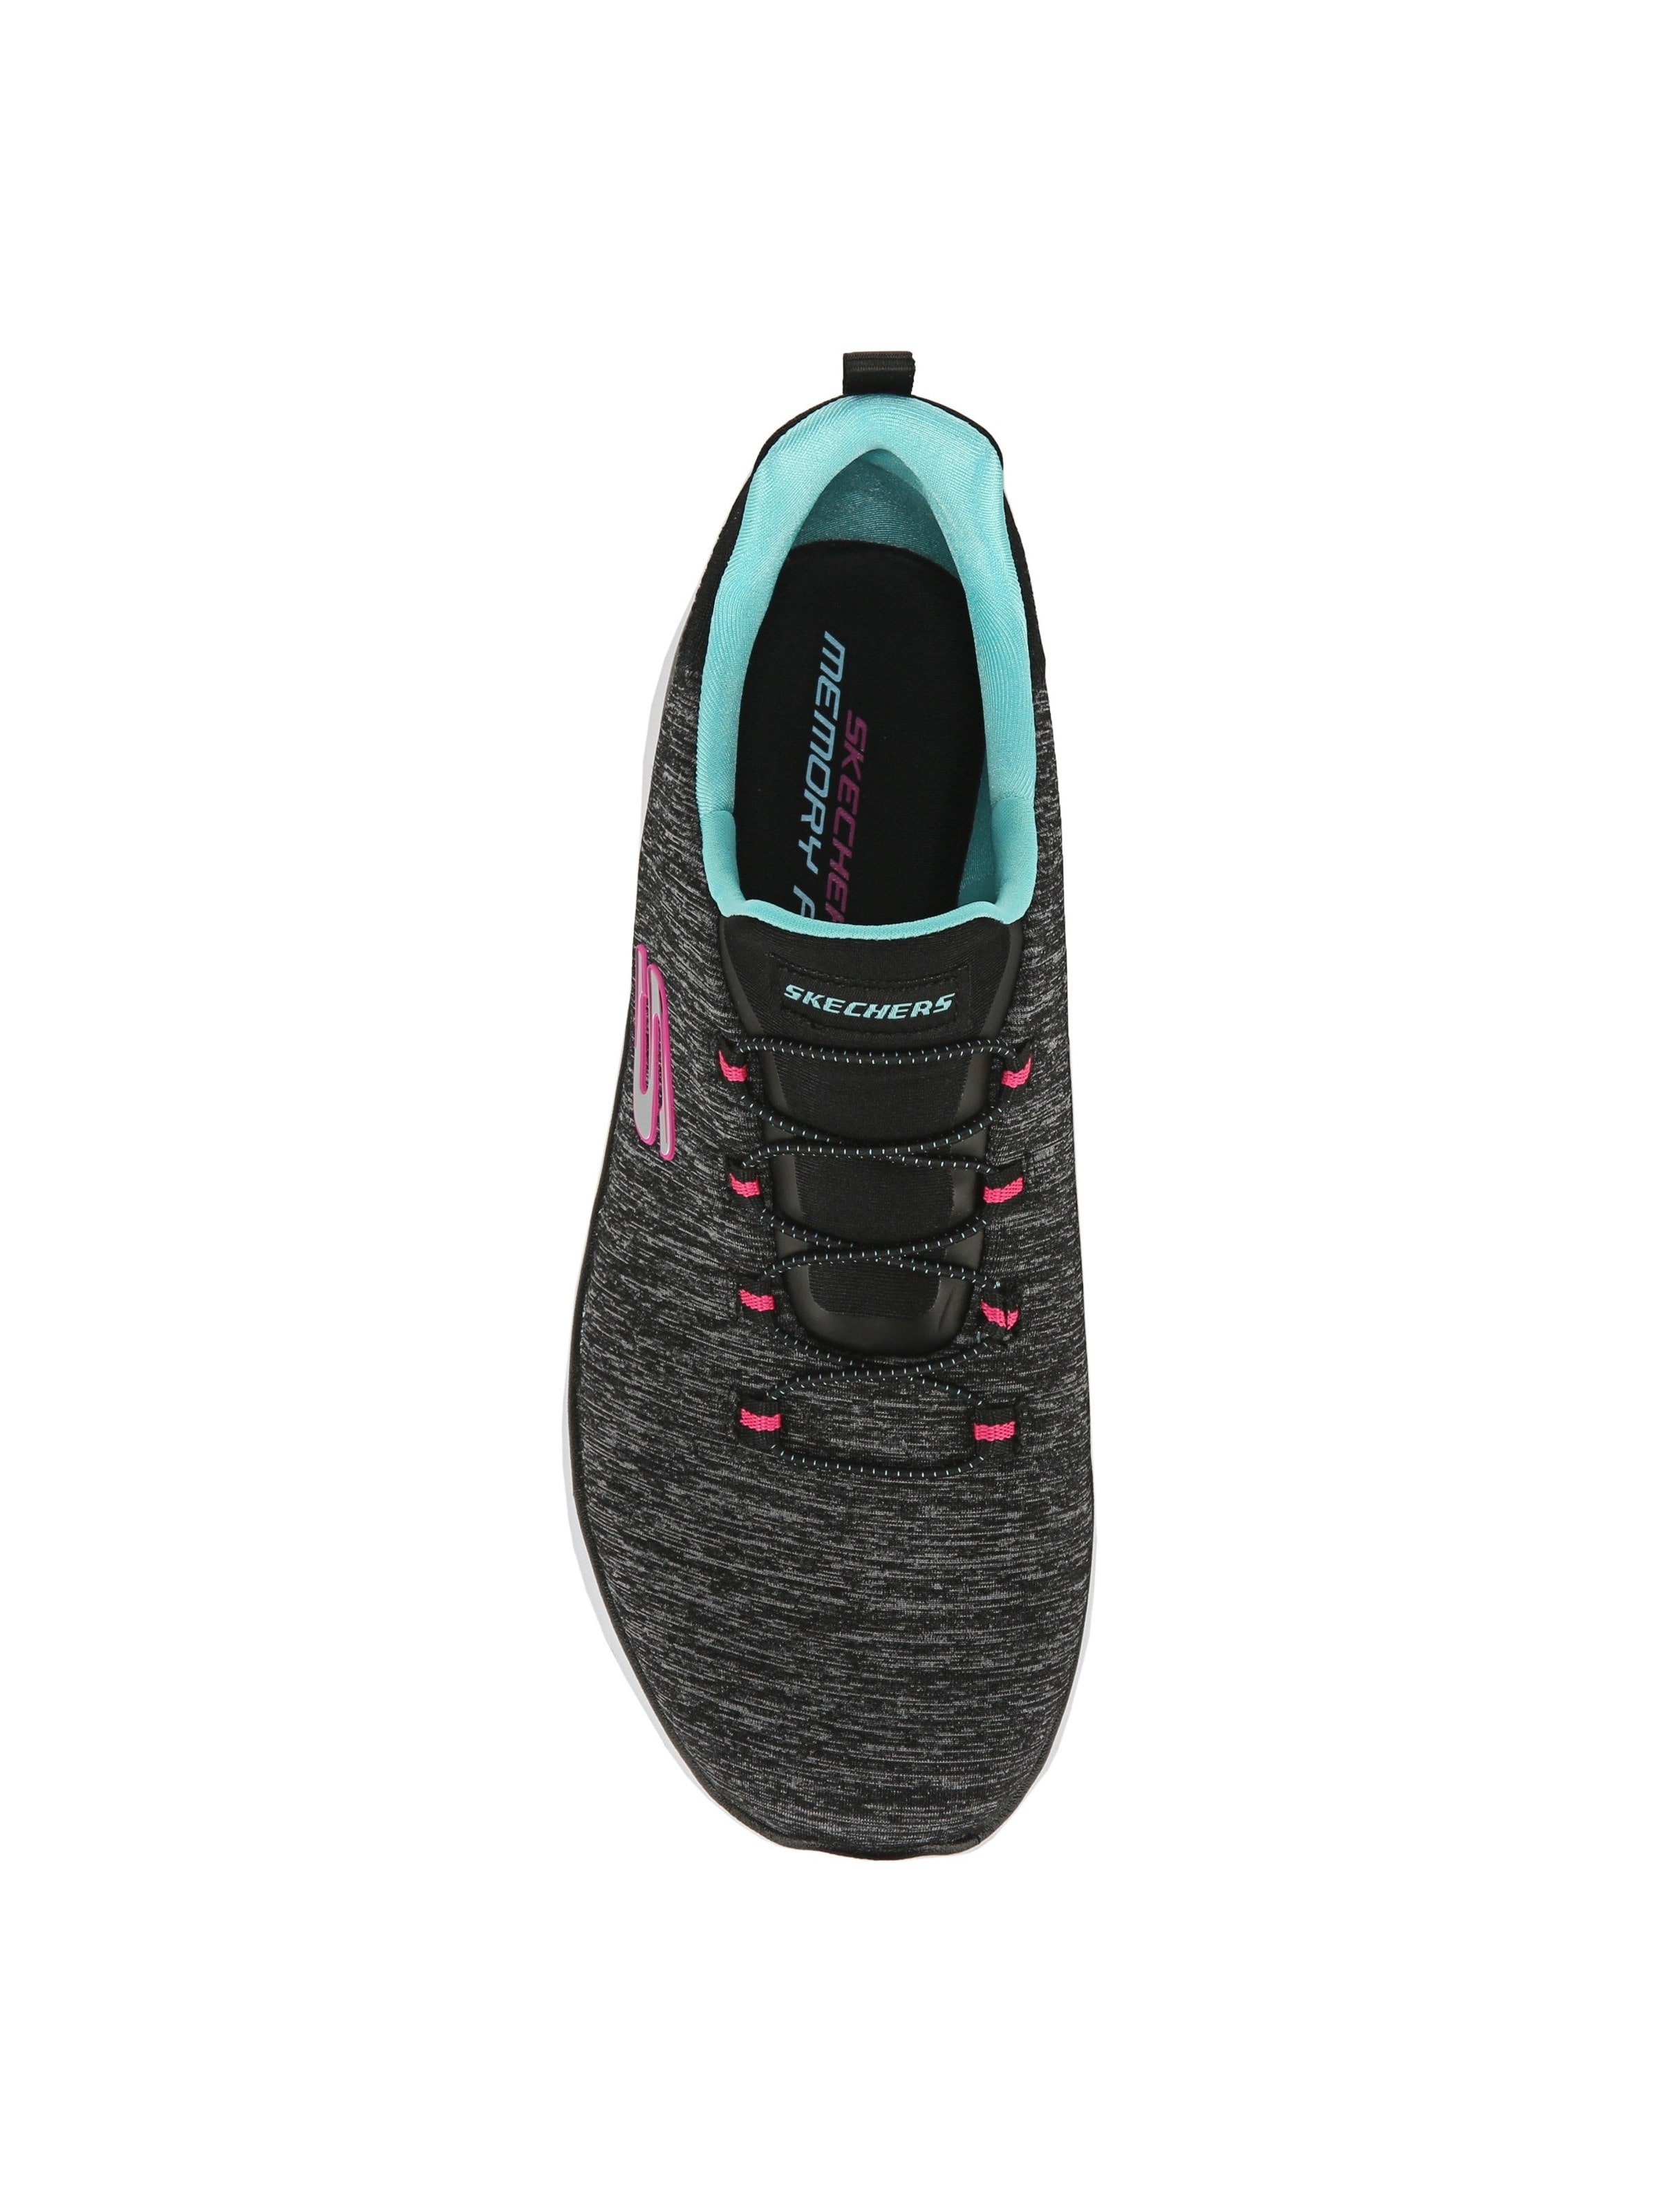 Skechers Women's Sport Summits Quick Getaway Slip-on Athletic Sneaker, Wide  Width Available